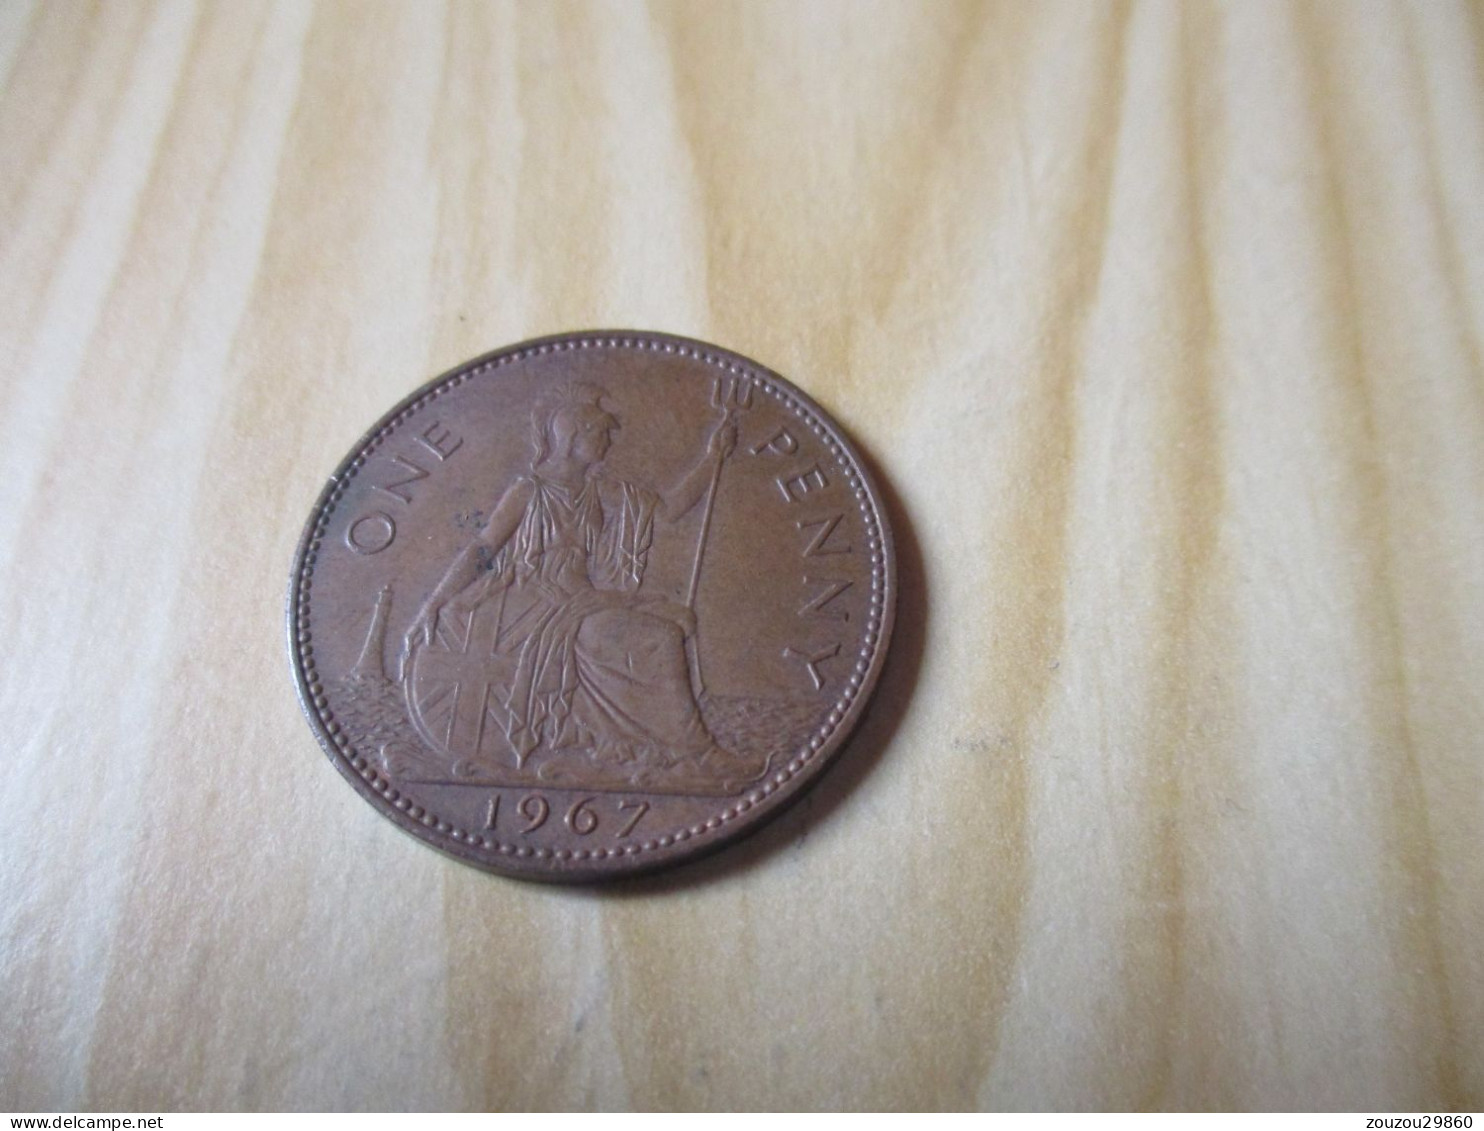 Grande-Bretagne - One Penny Elizabeth II 1967.N°584. - D. 1 Penny